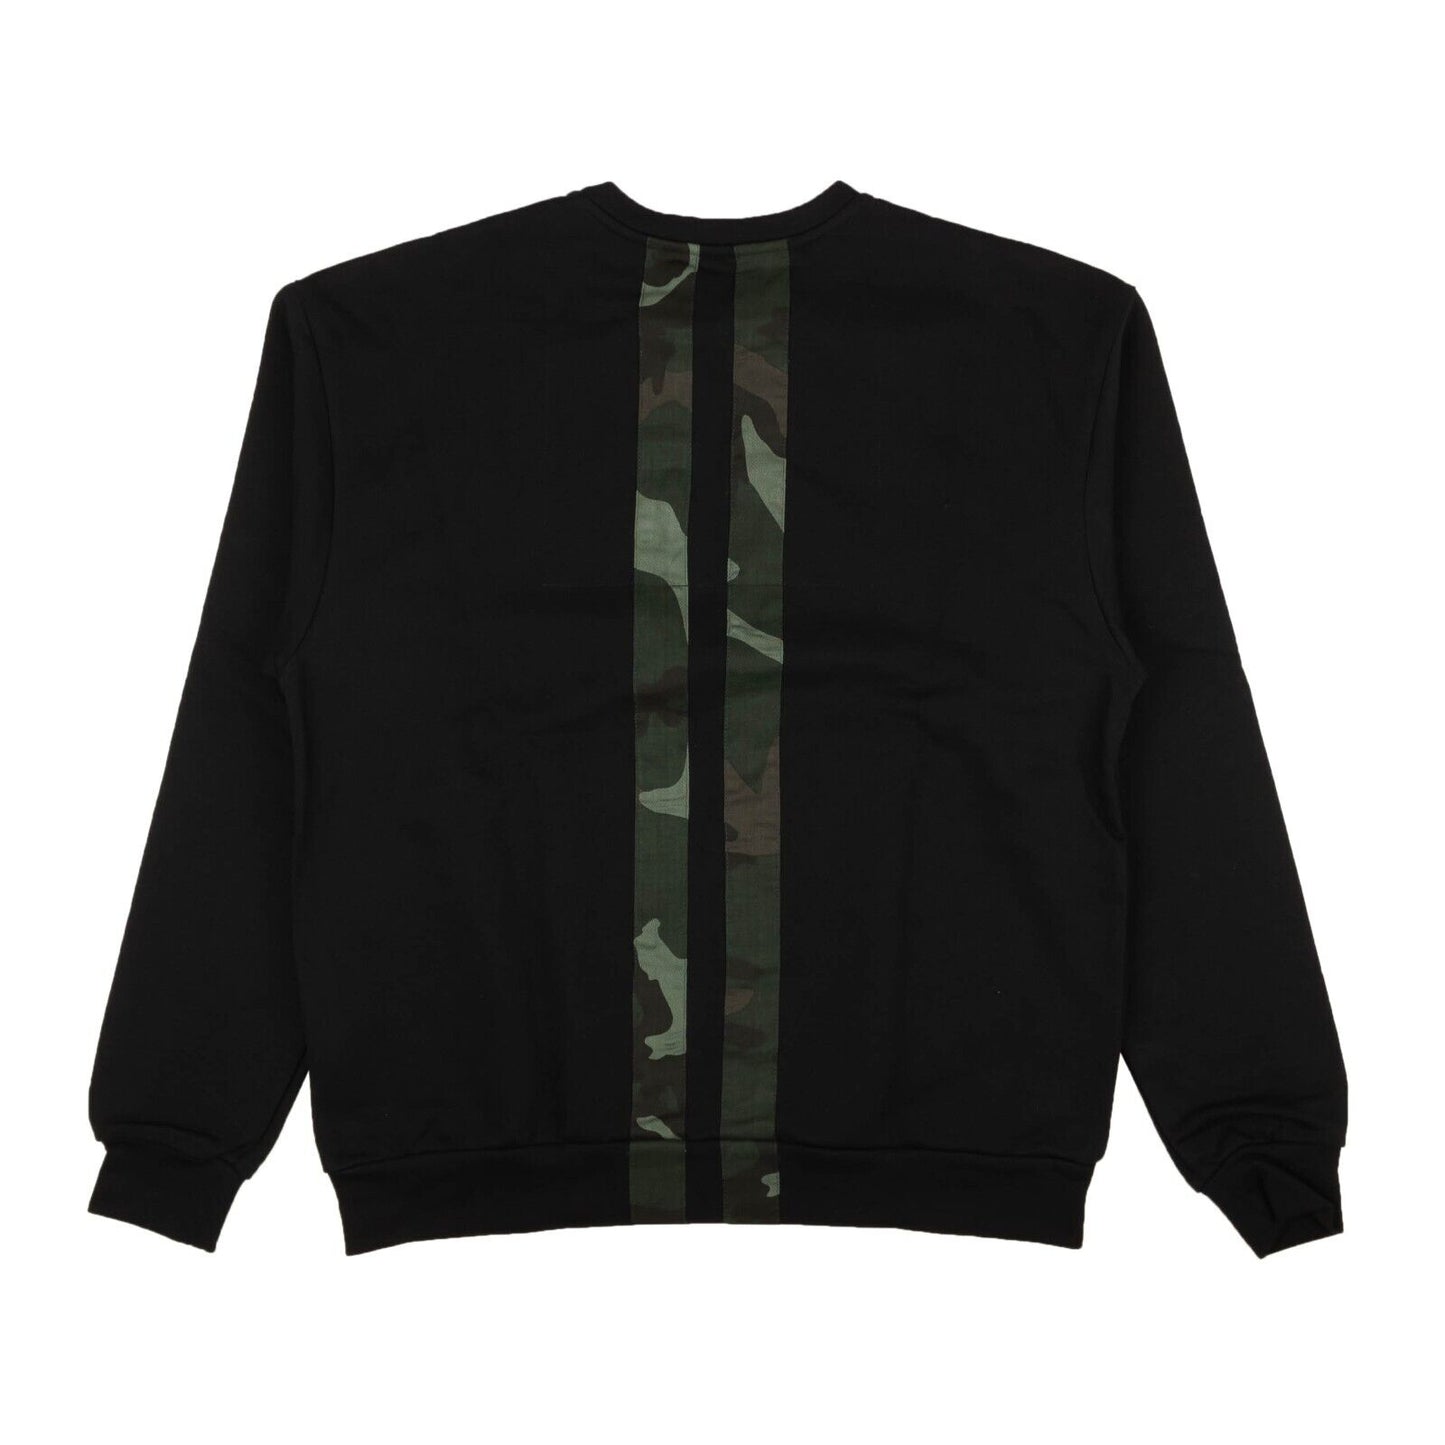 Pyer Moss Camo Stripes Crewneck Sweatshirt - Black/Green